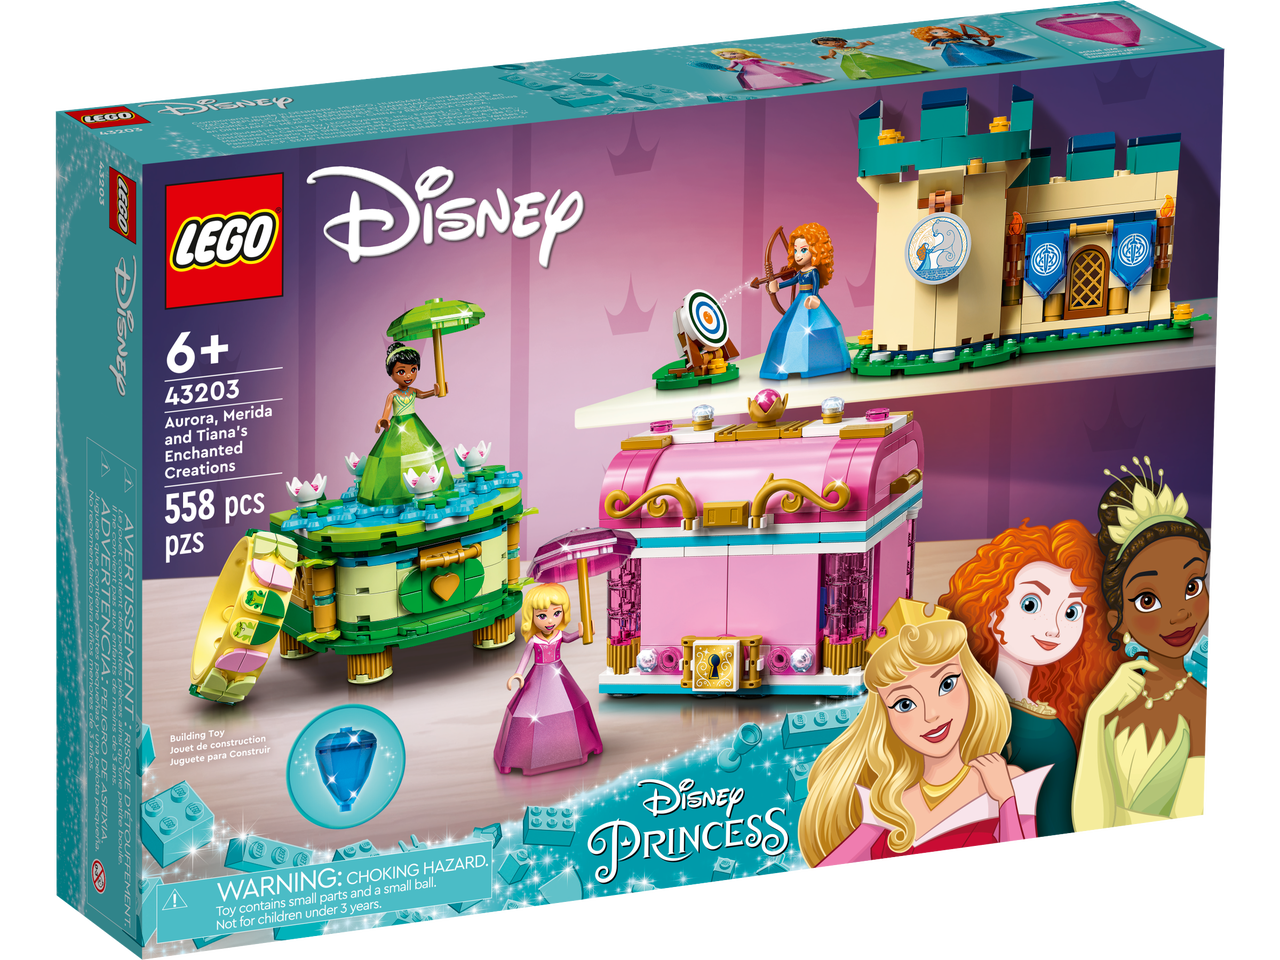 LEGO Disney Princess - Aurora, Merida and Tiana’s Enchanted Creations (43203.)